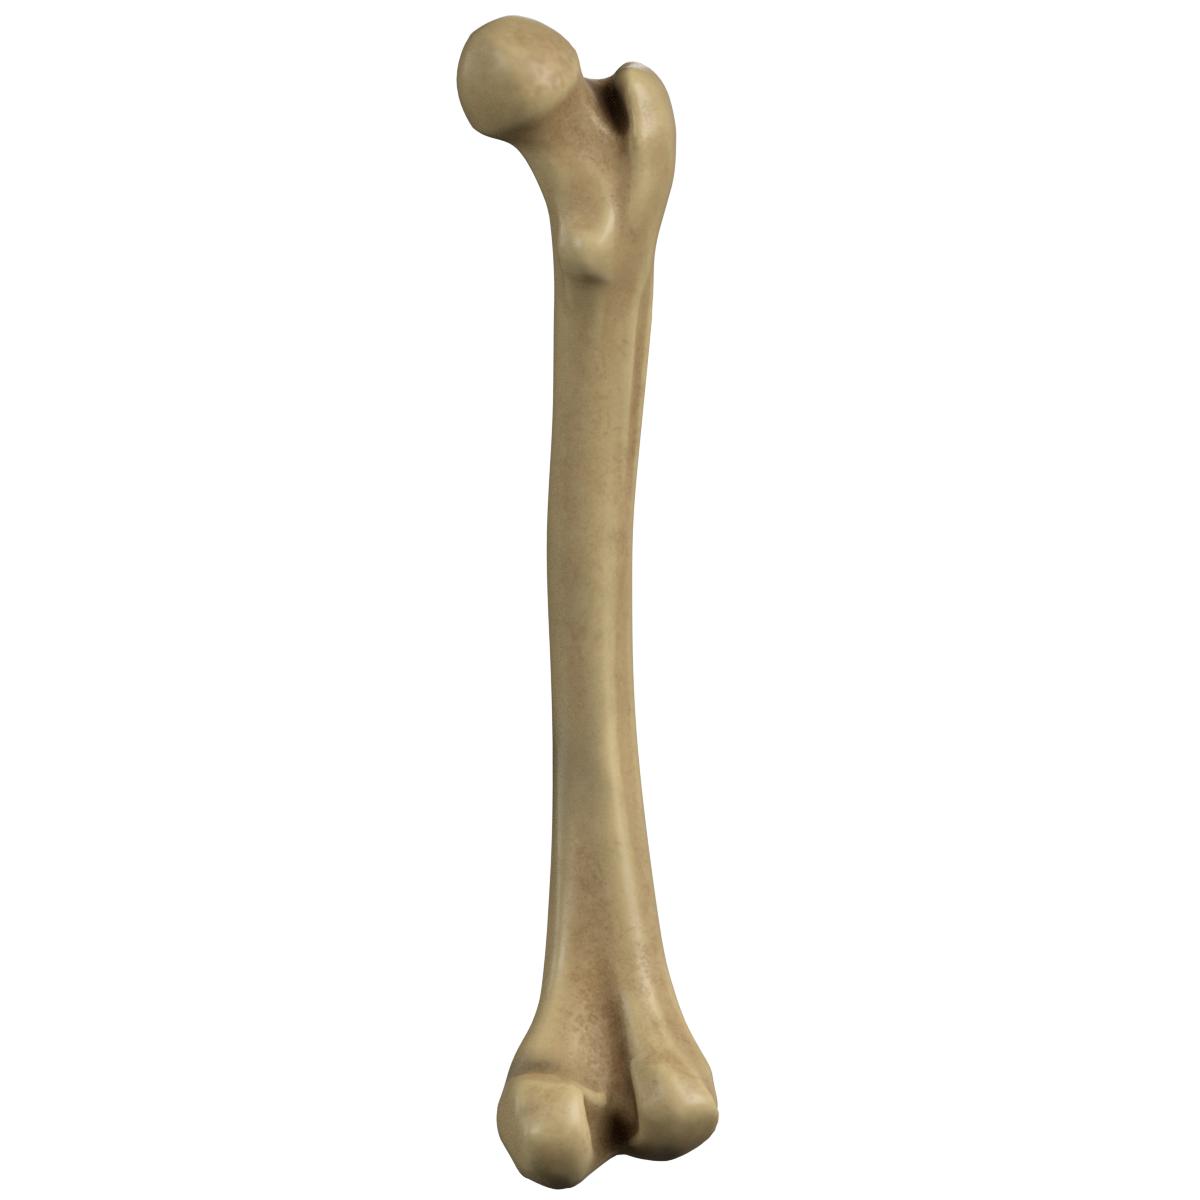 Anatomy - Human Femur (Thigh, leg bone) by FrancescoMilanese | 3DOcean